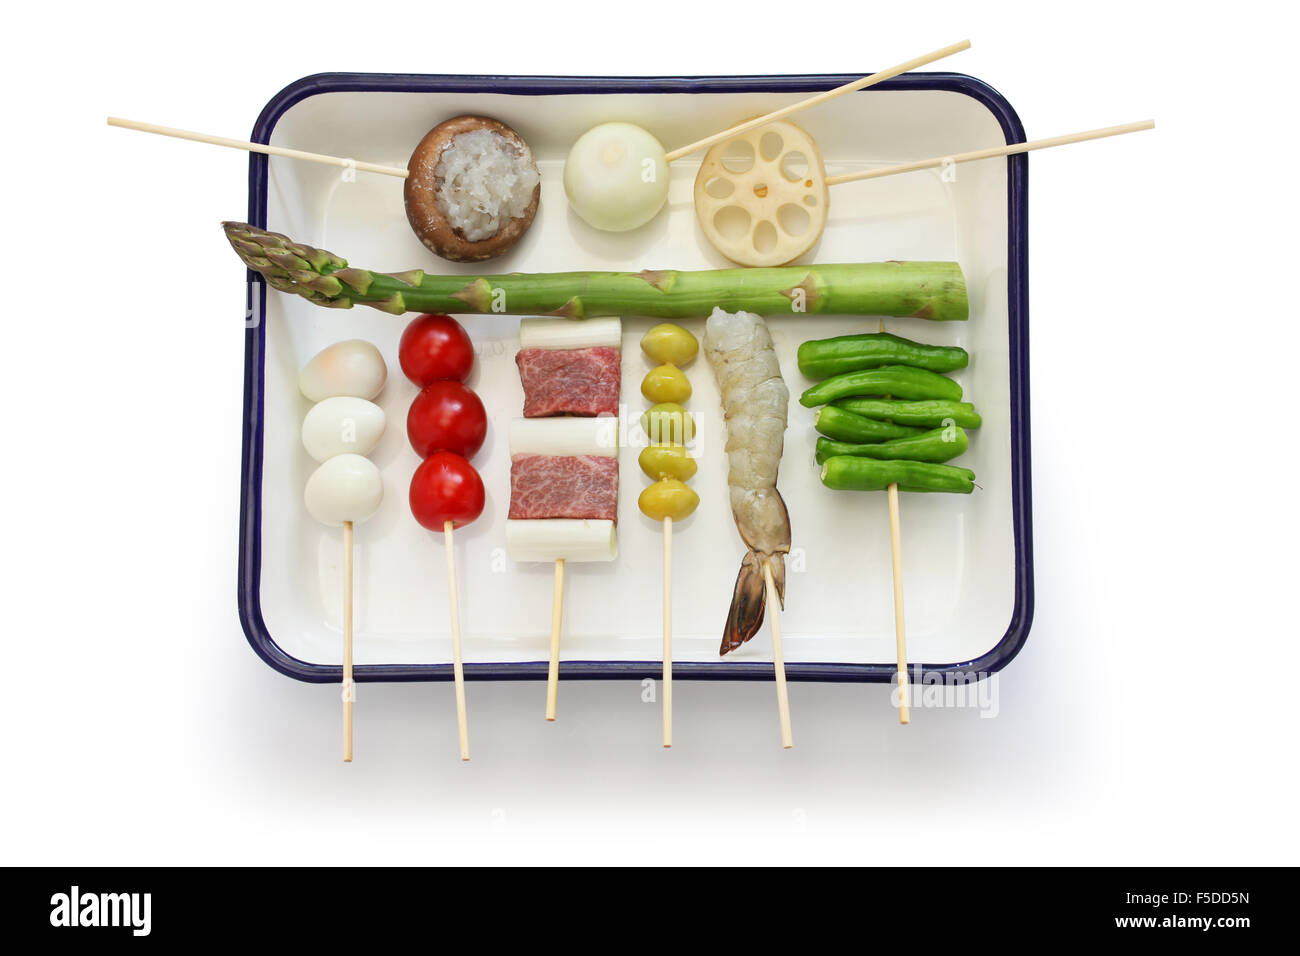 kushiage(deep fried food on a stick),japanese food,cooking process Stock Photo